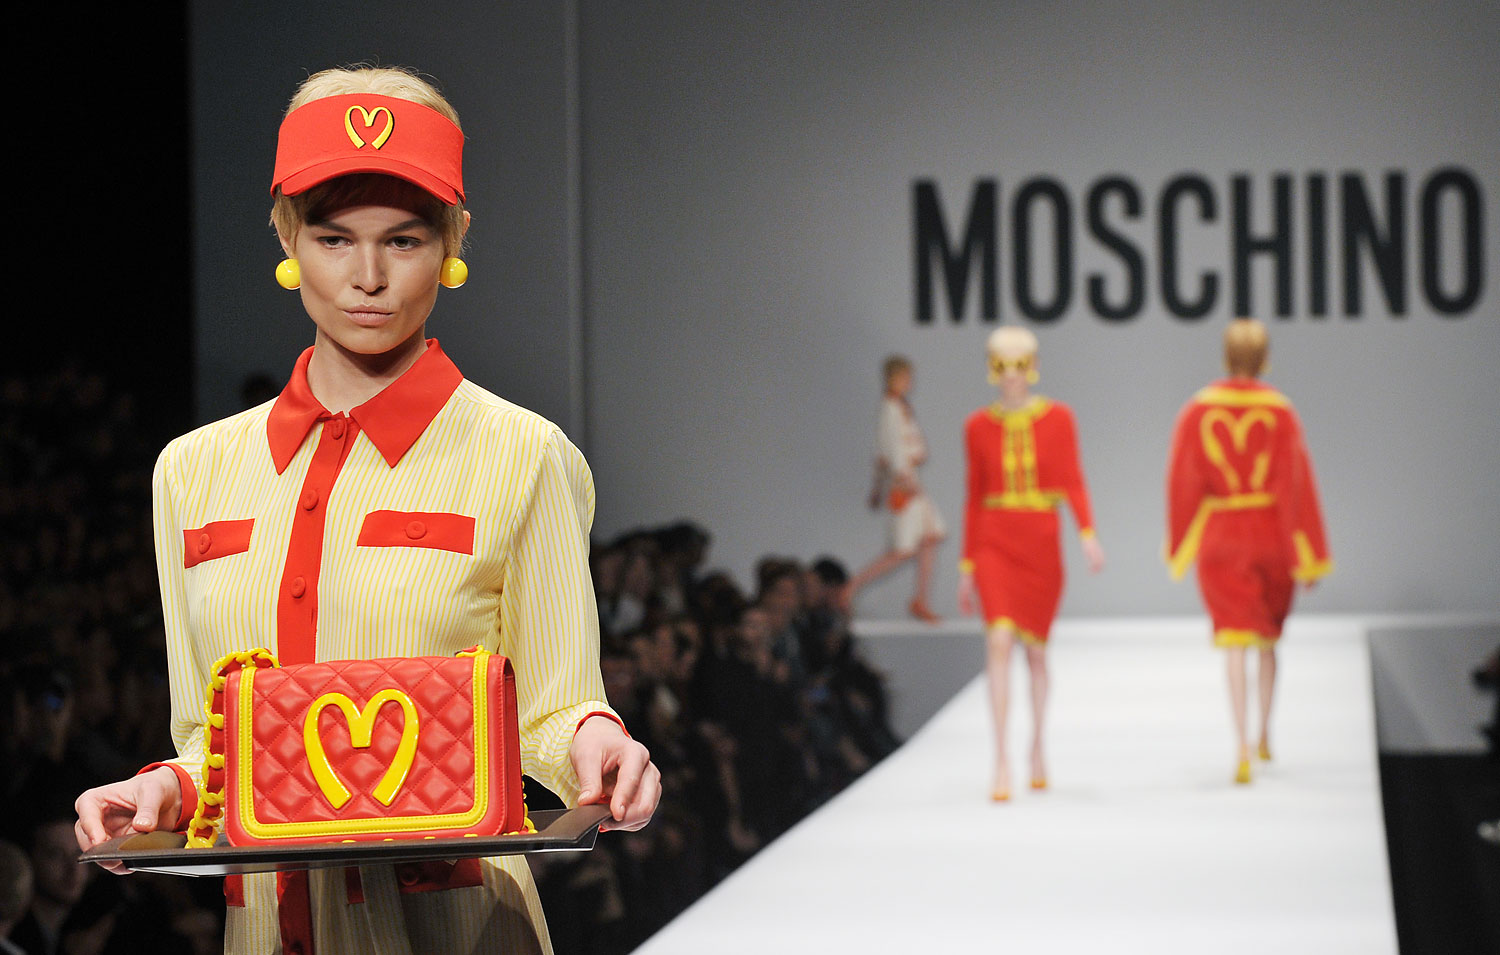 Moschino McDonalds Jeremy Scott Clothes 